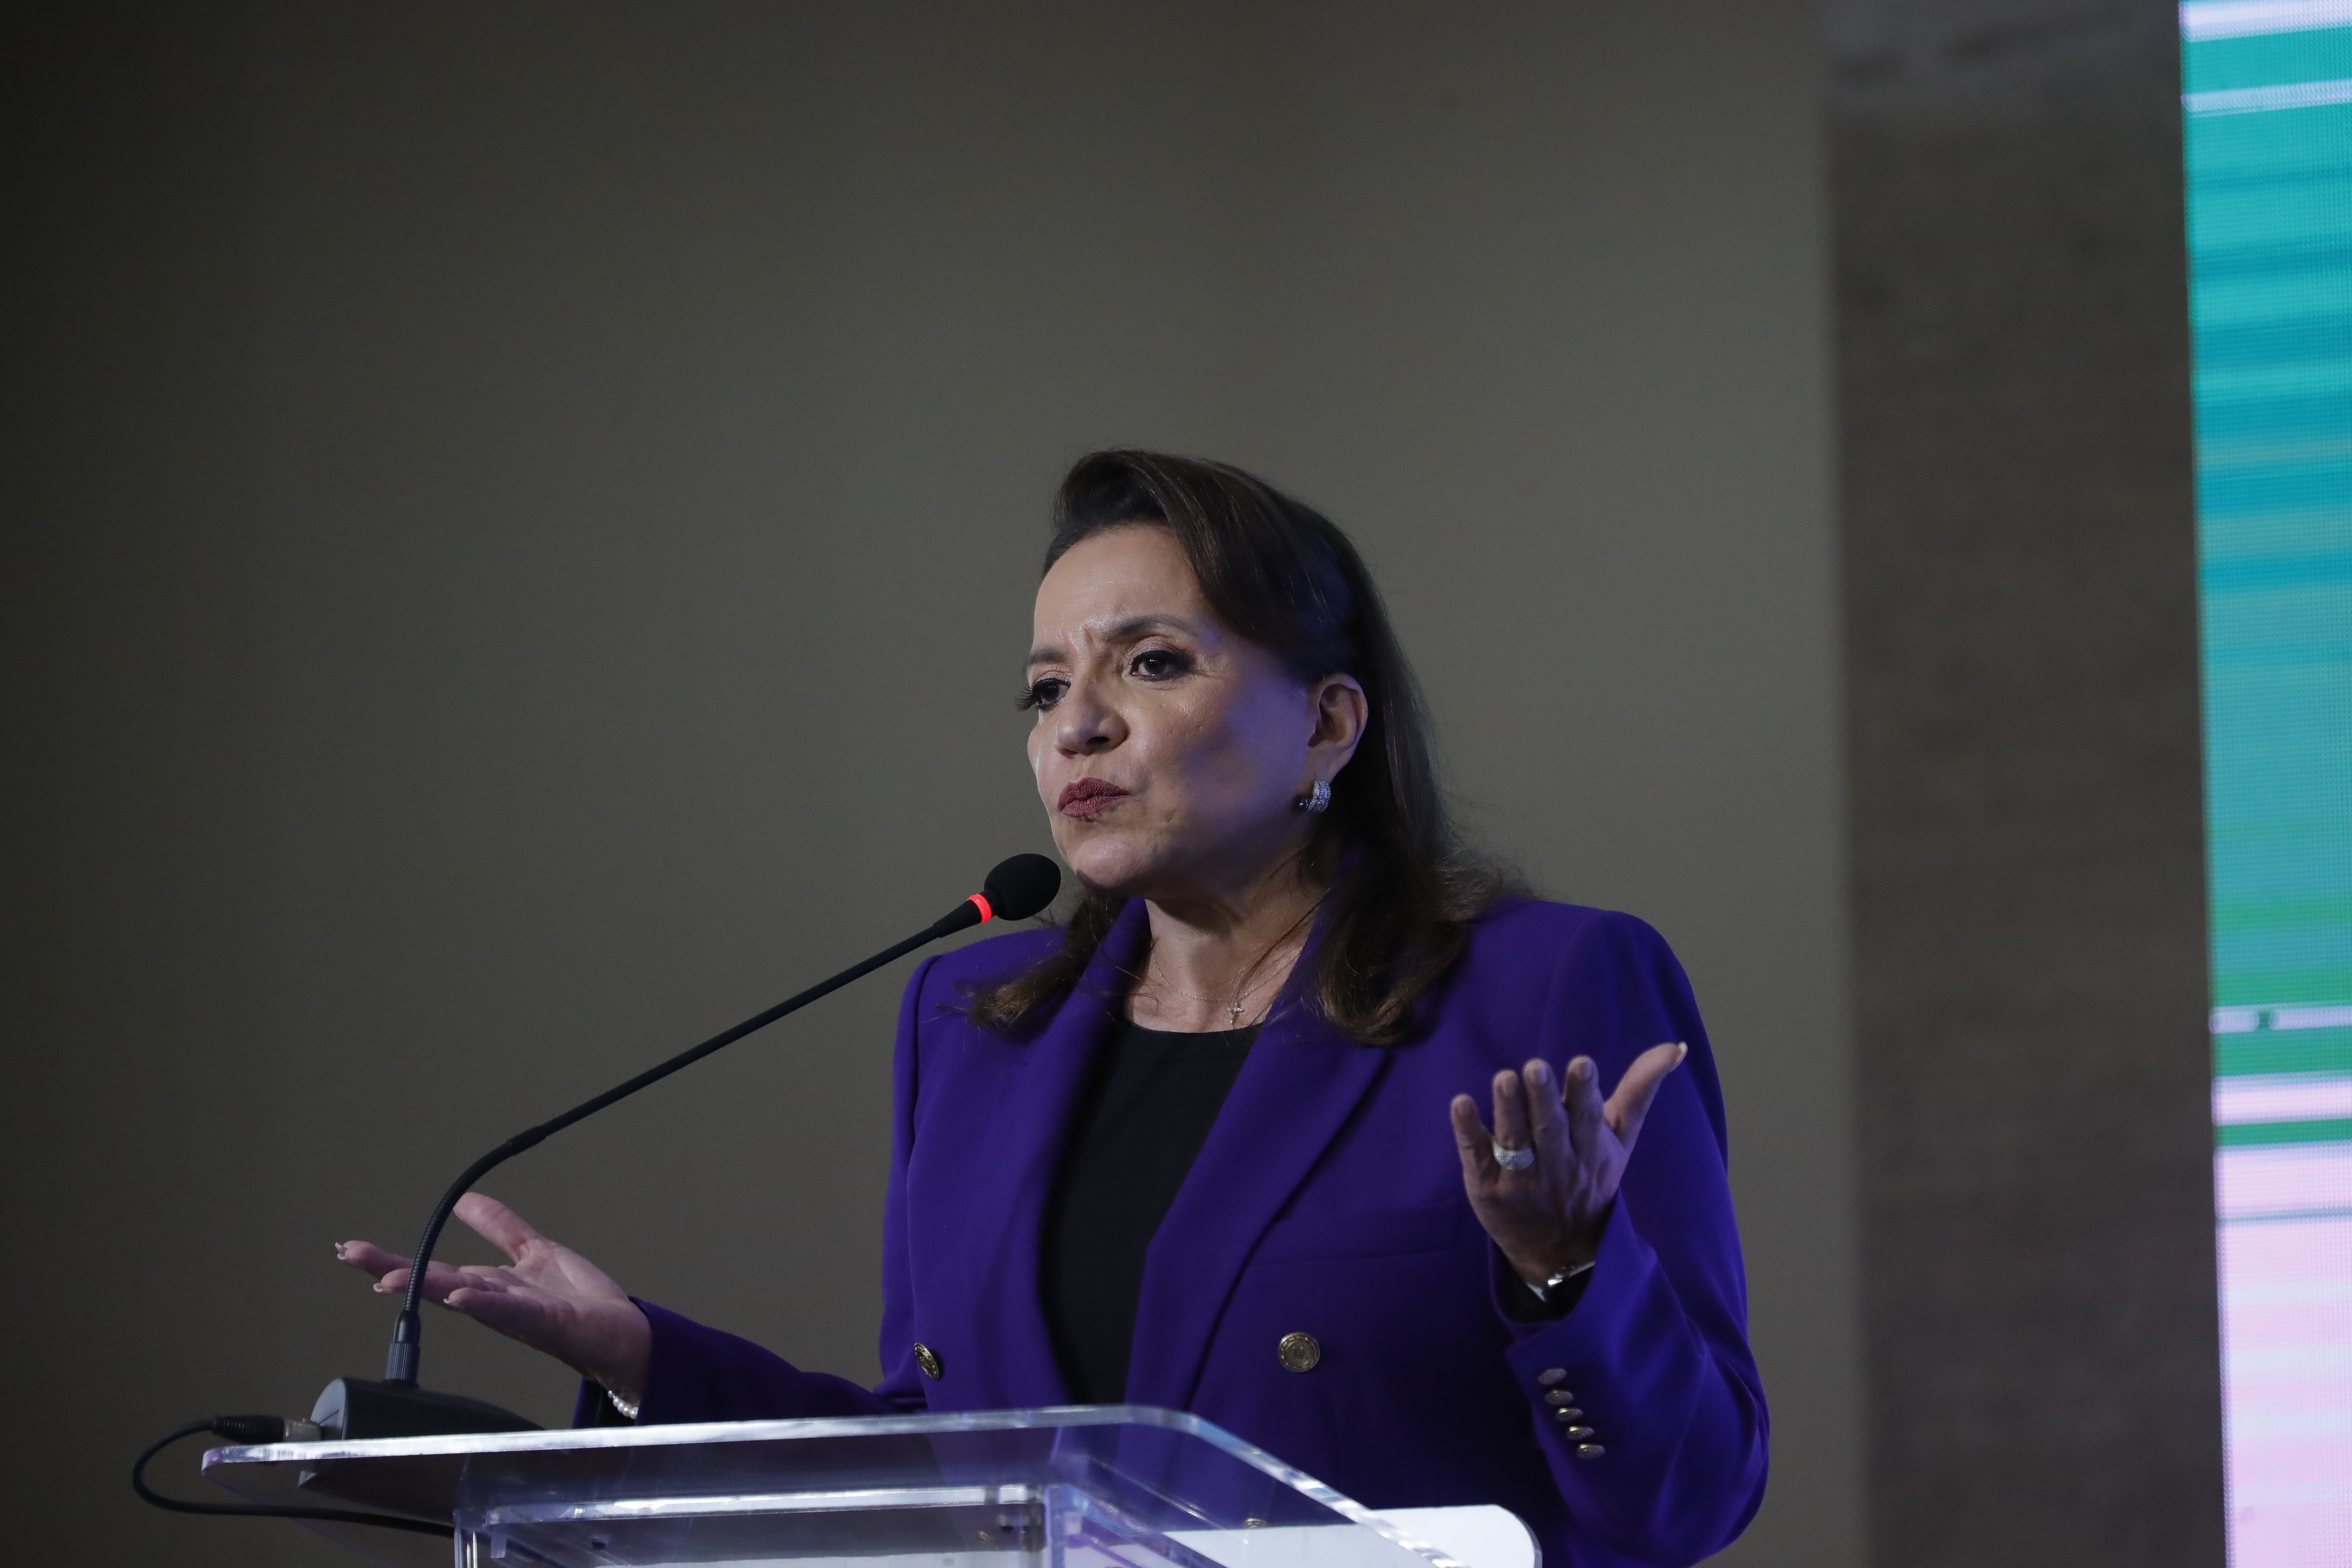 La presidenta electa de Honduras, Xiomara Castro